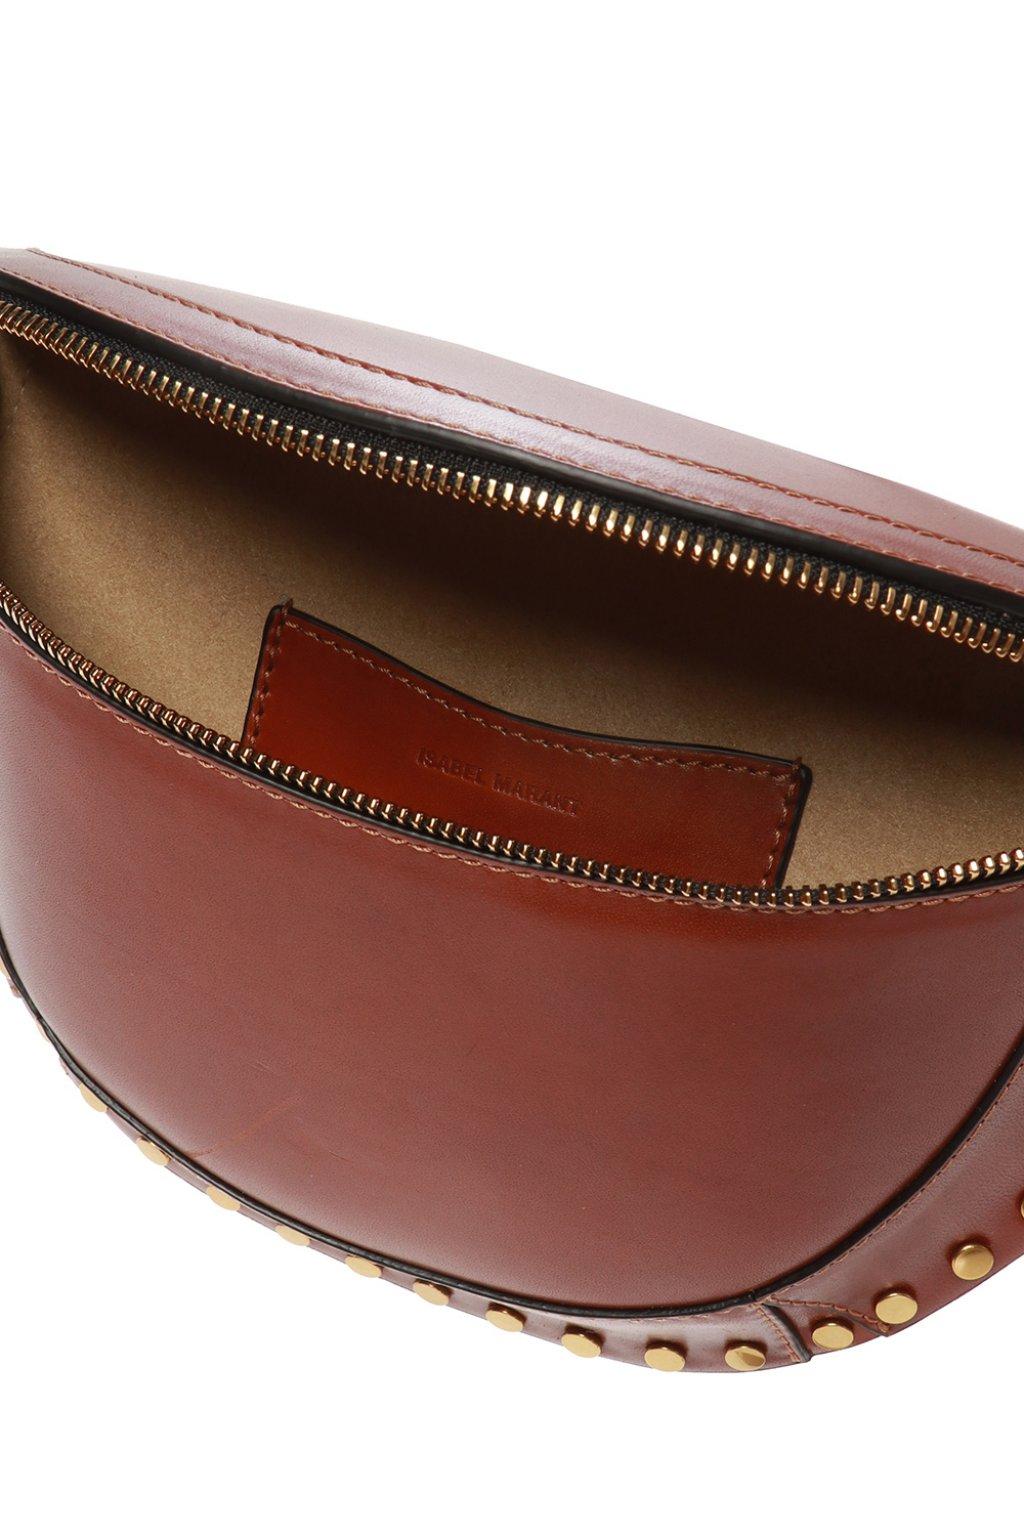 Isabel Marant Leather Skano Belt Bag in Brown - Lyst